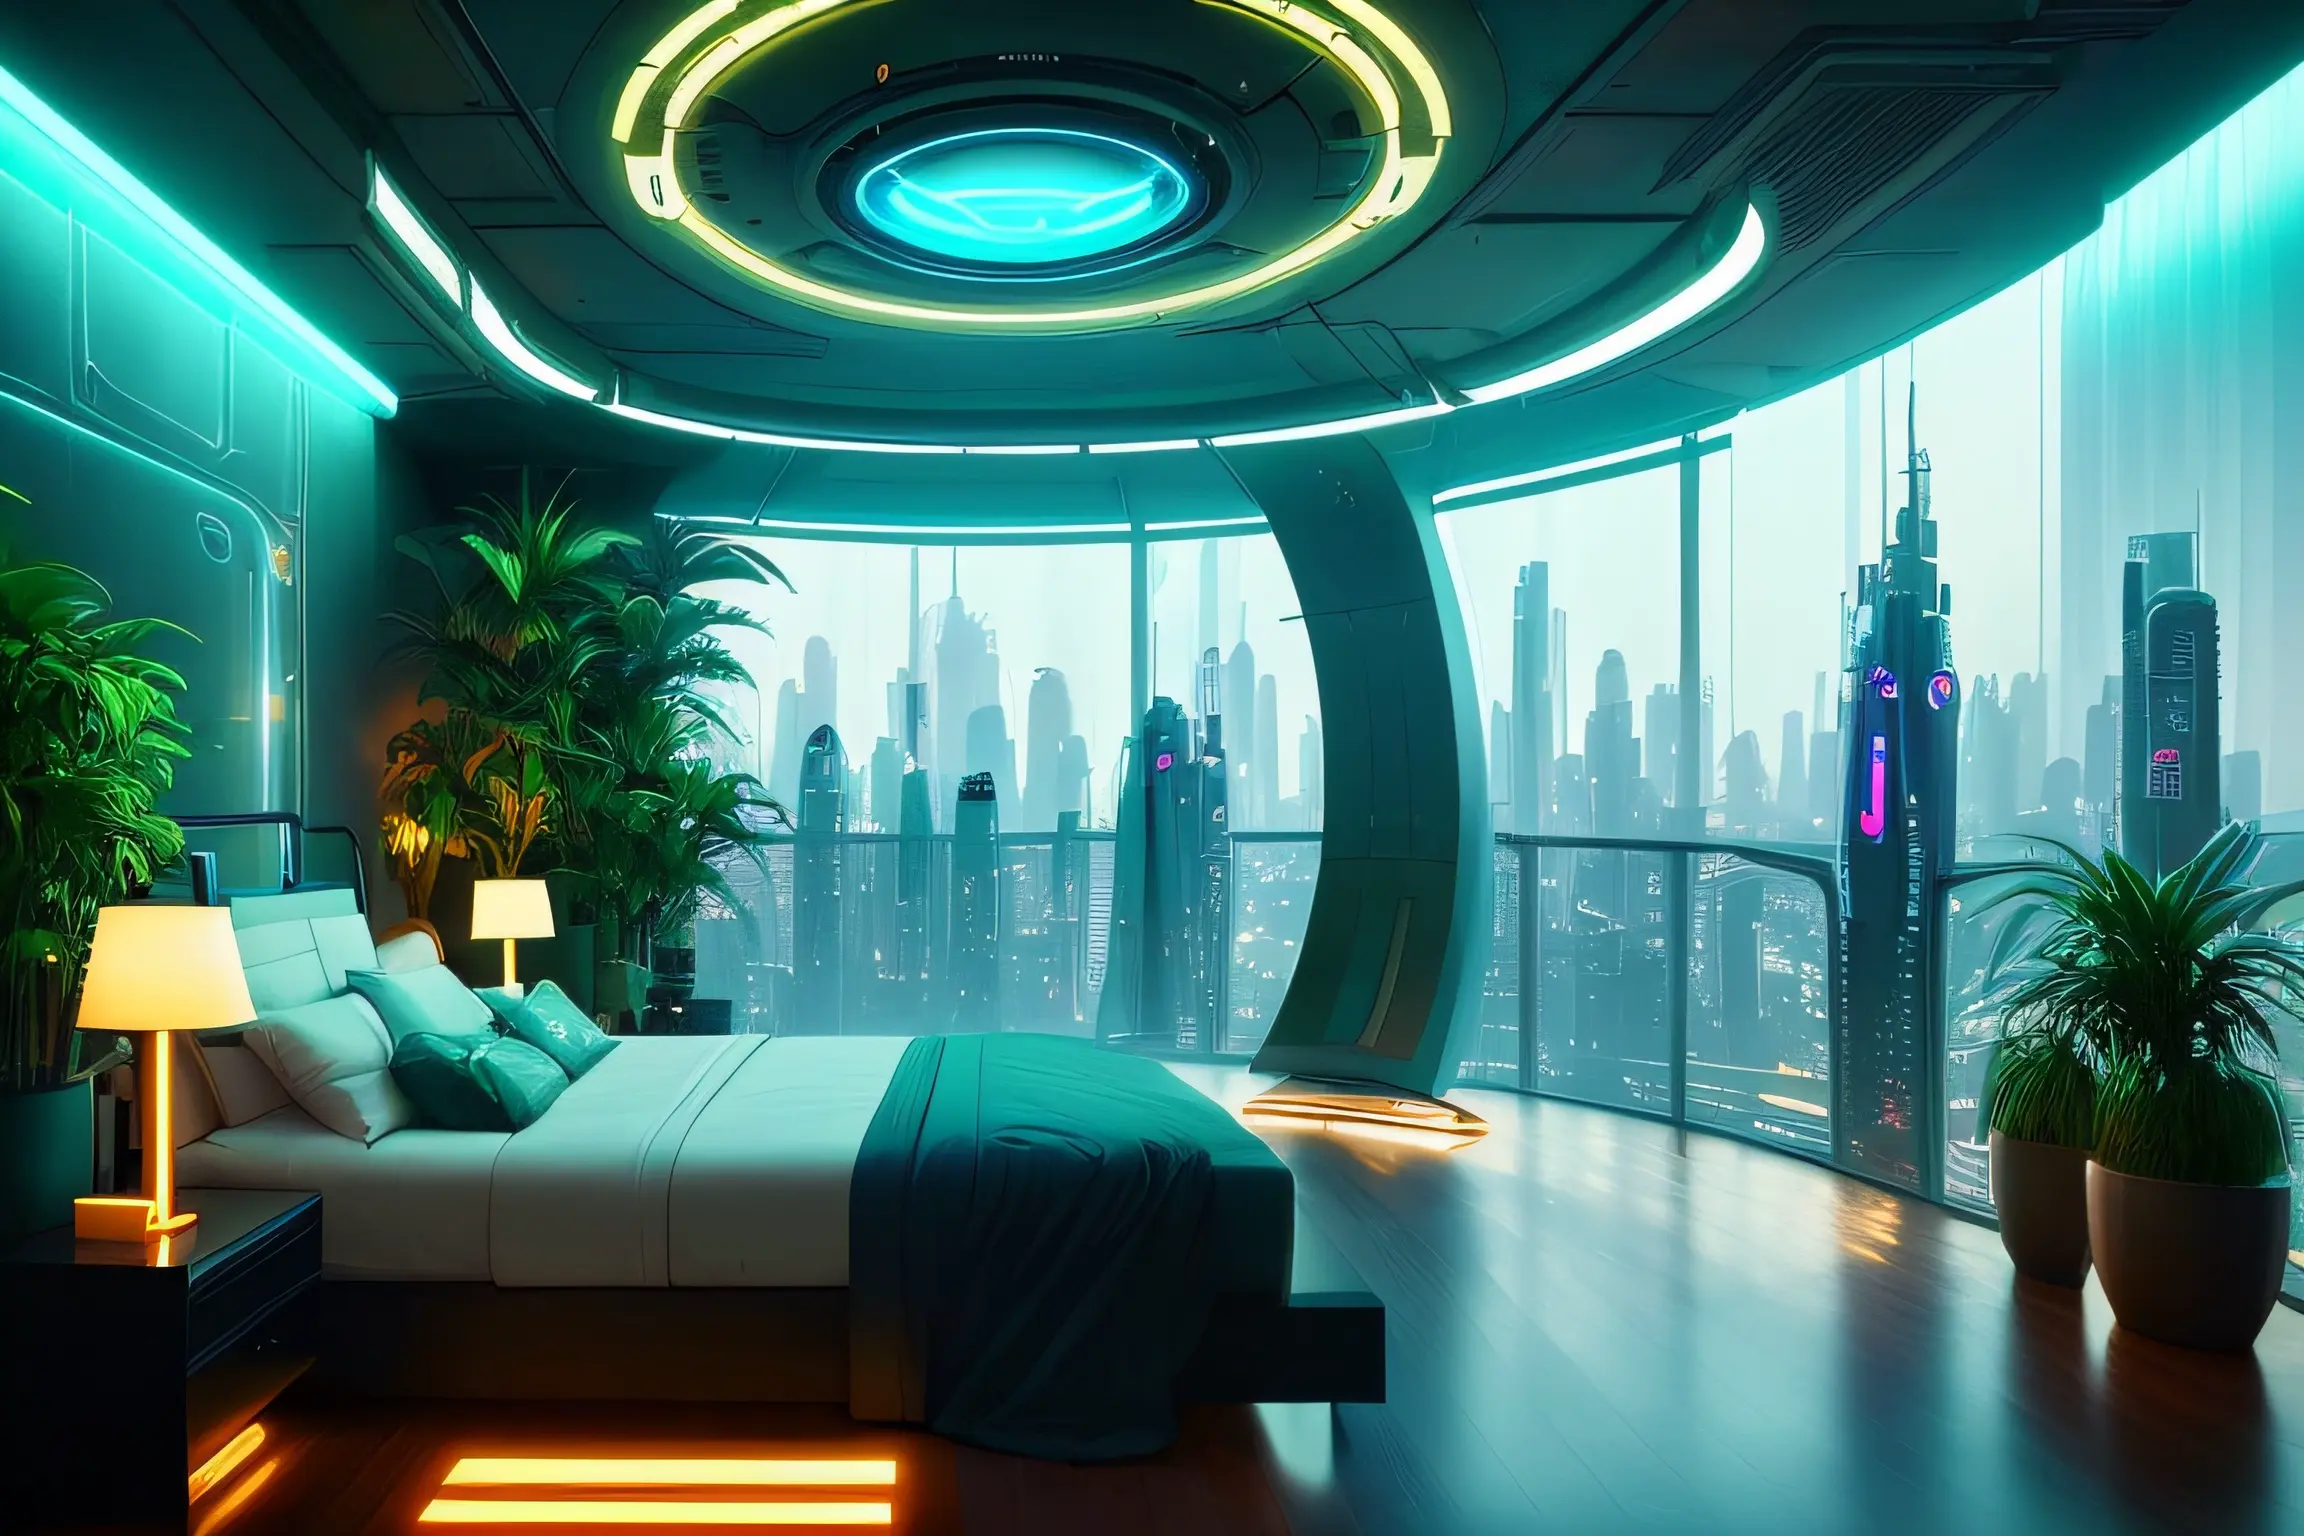 Futuristic Bedroom